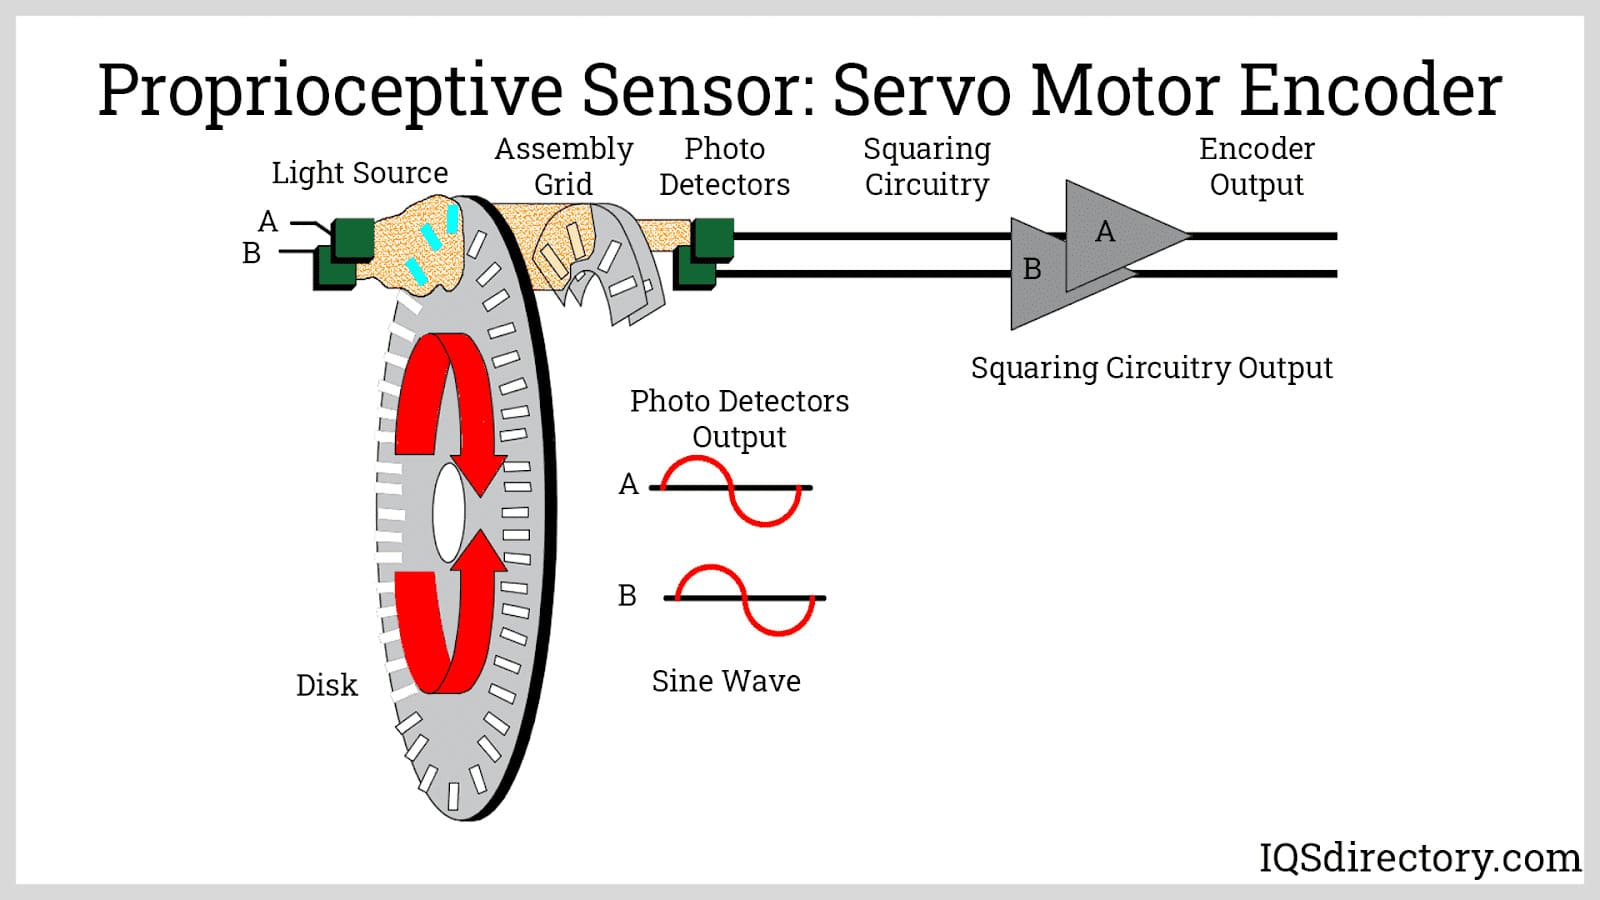 Proprioceptive Sensor: Servo Motor Encoder